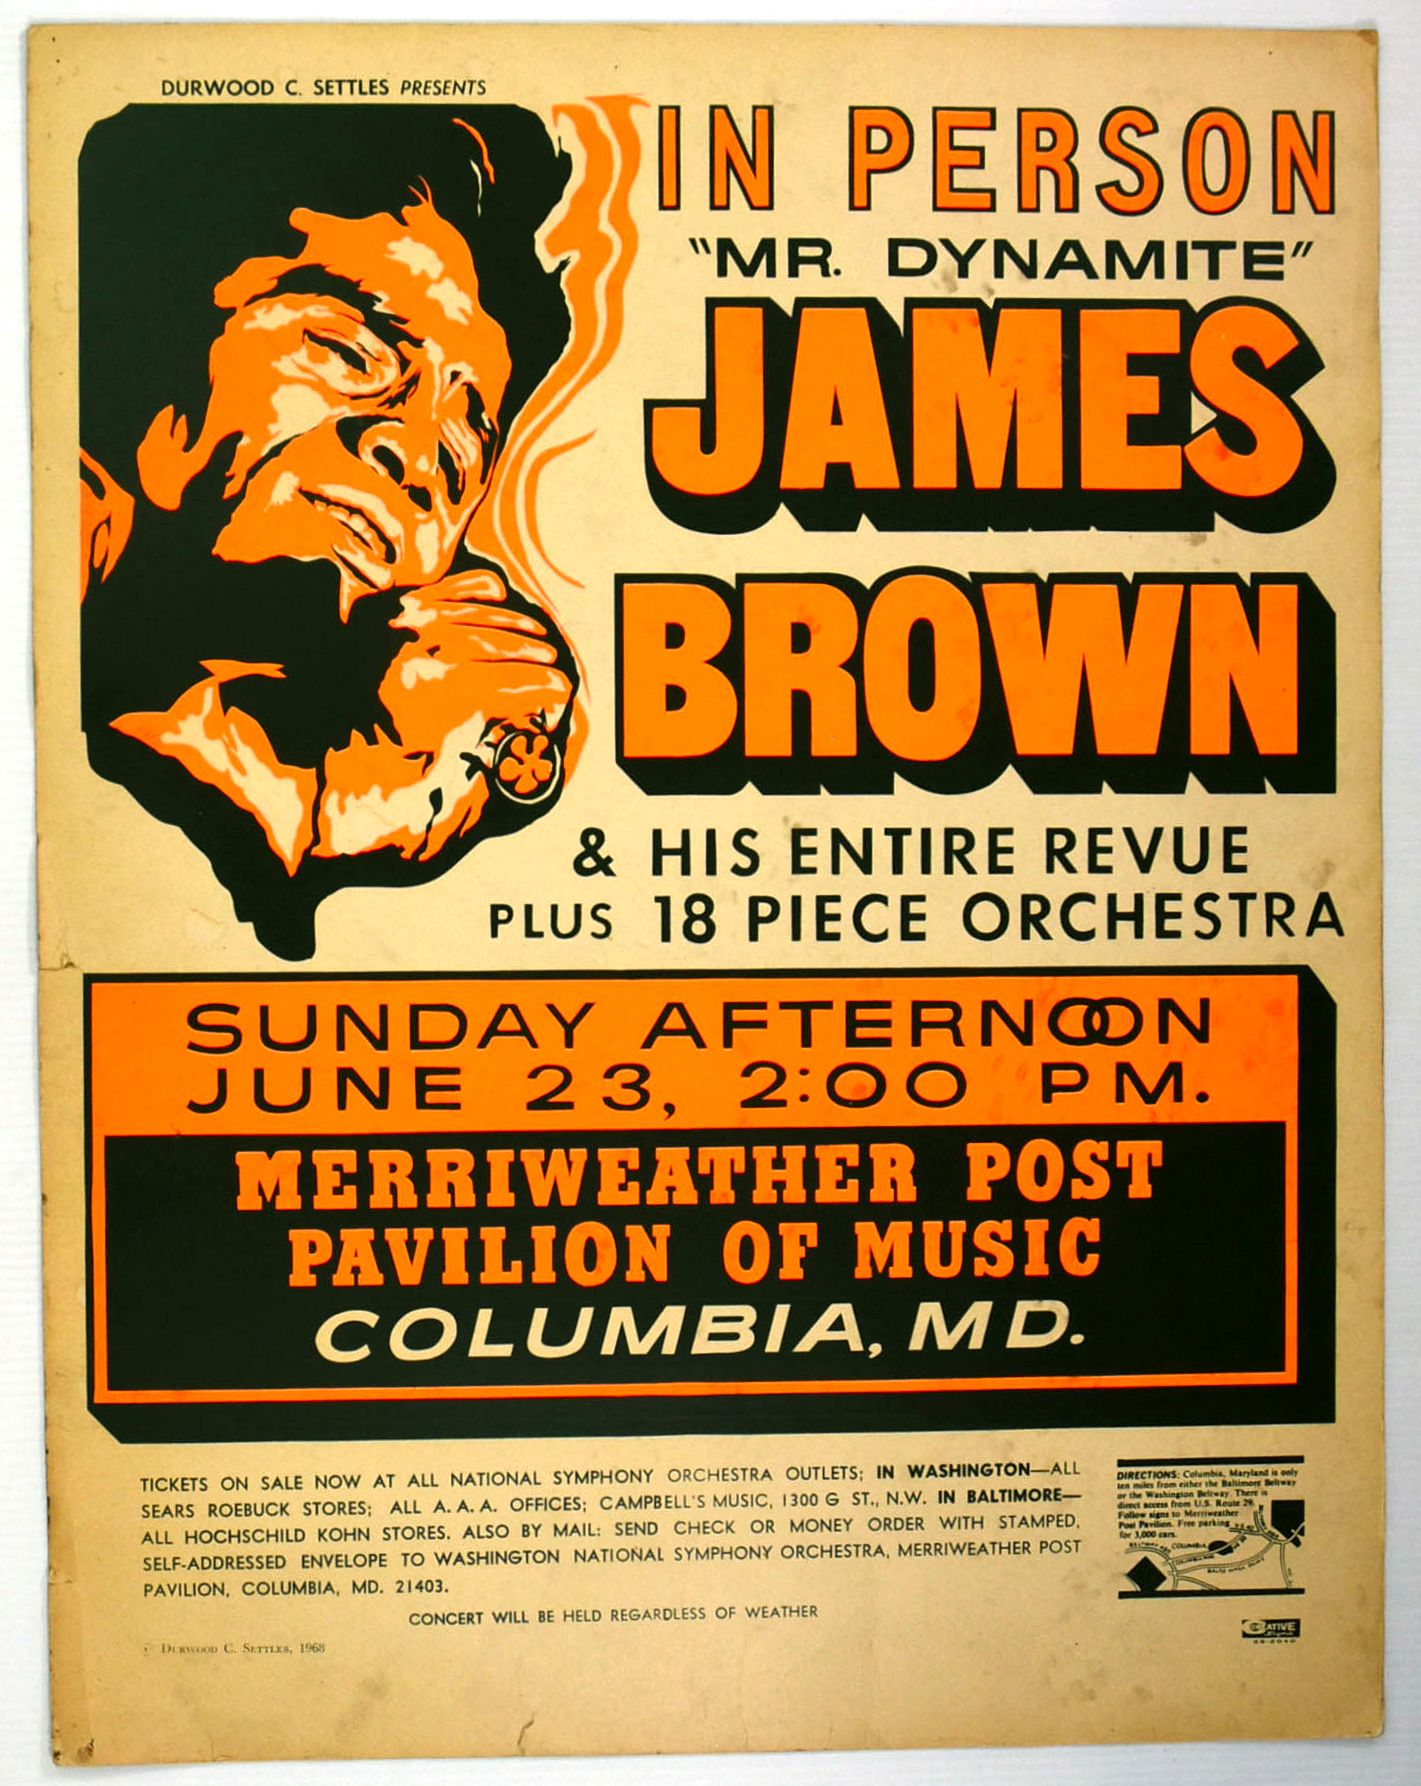 James Brown at Merriweather Post Pavilion 1968 Concert Poster